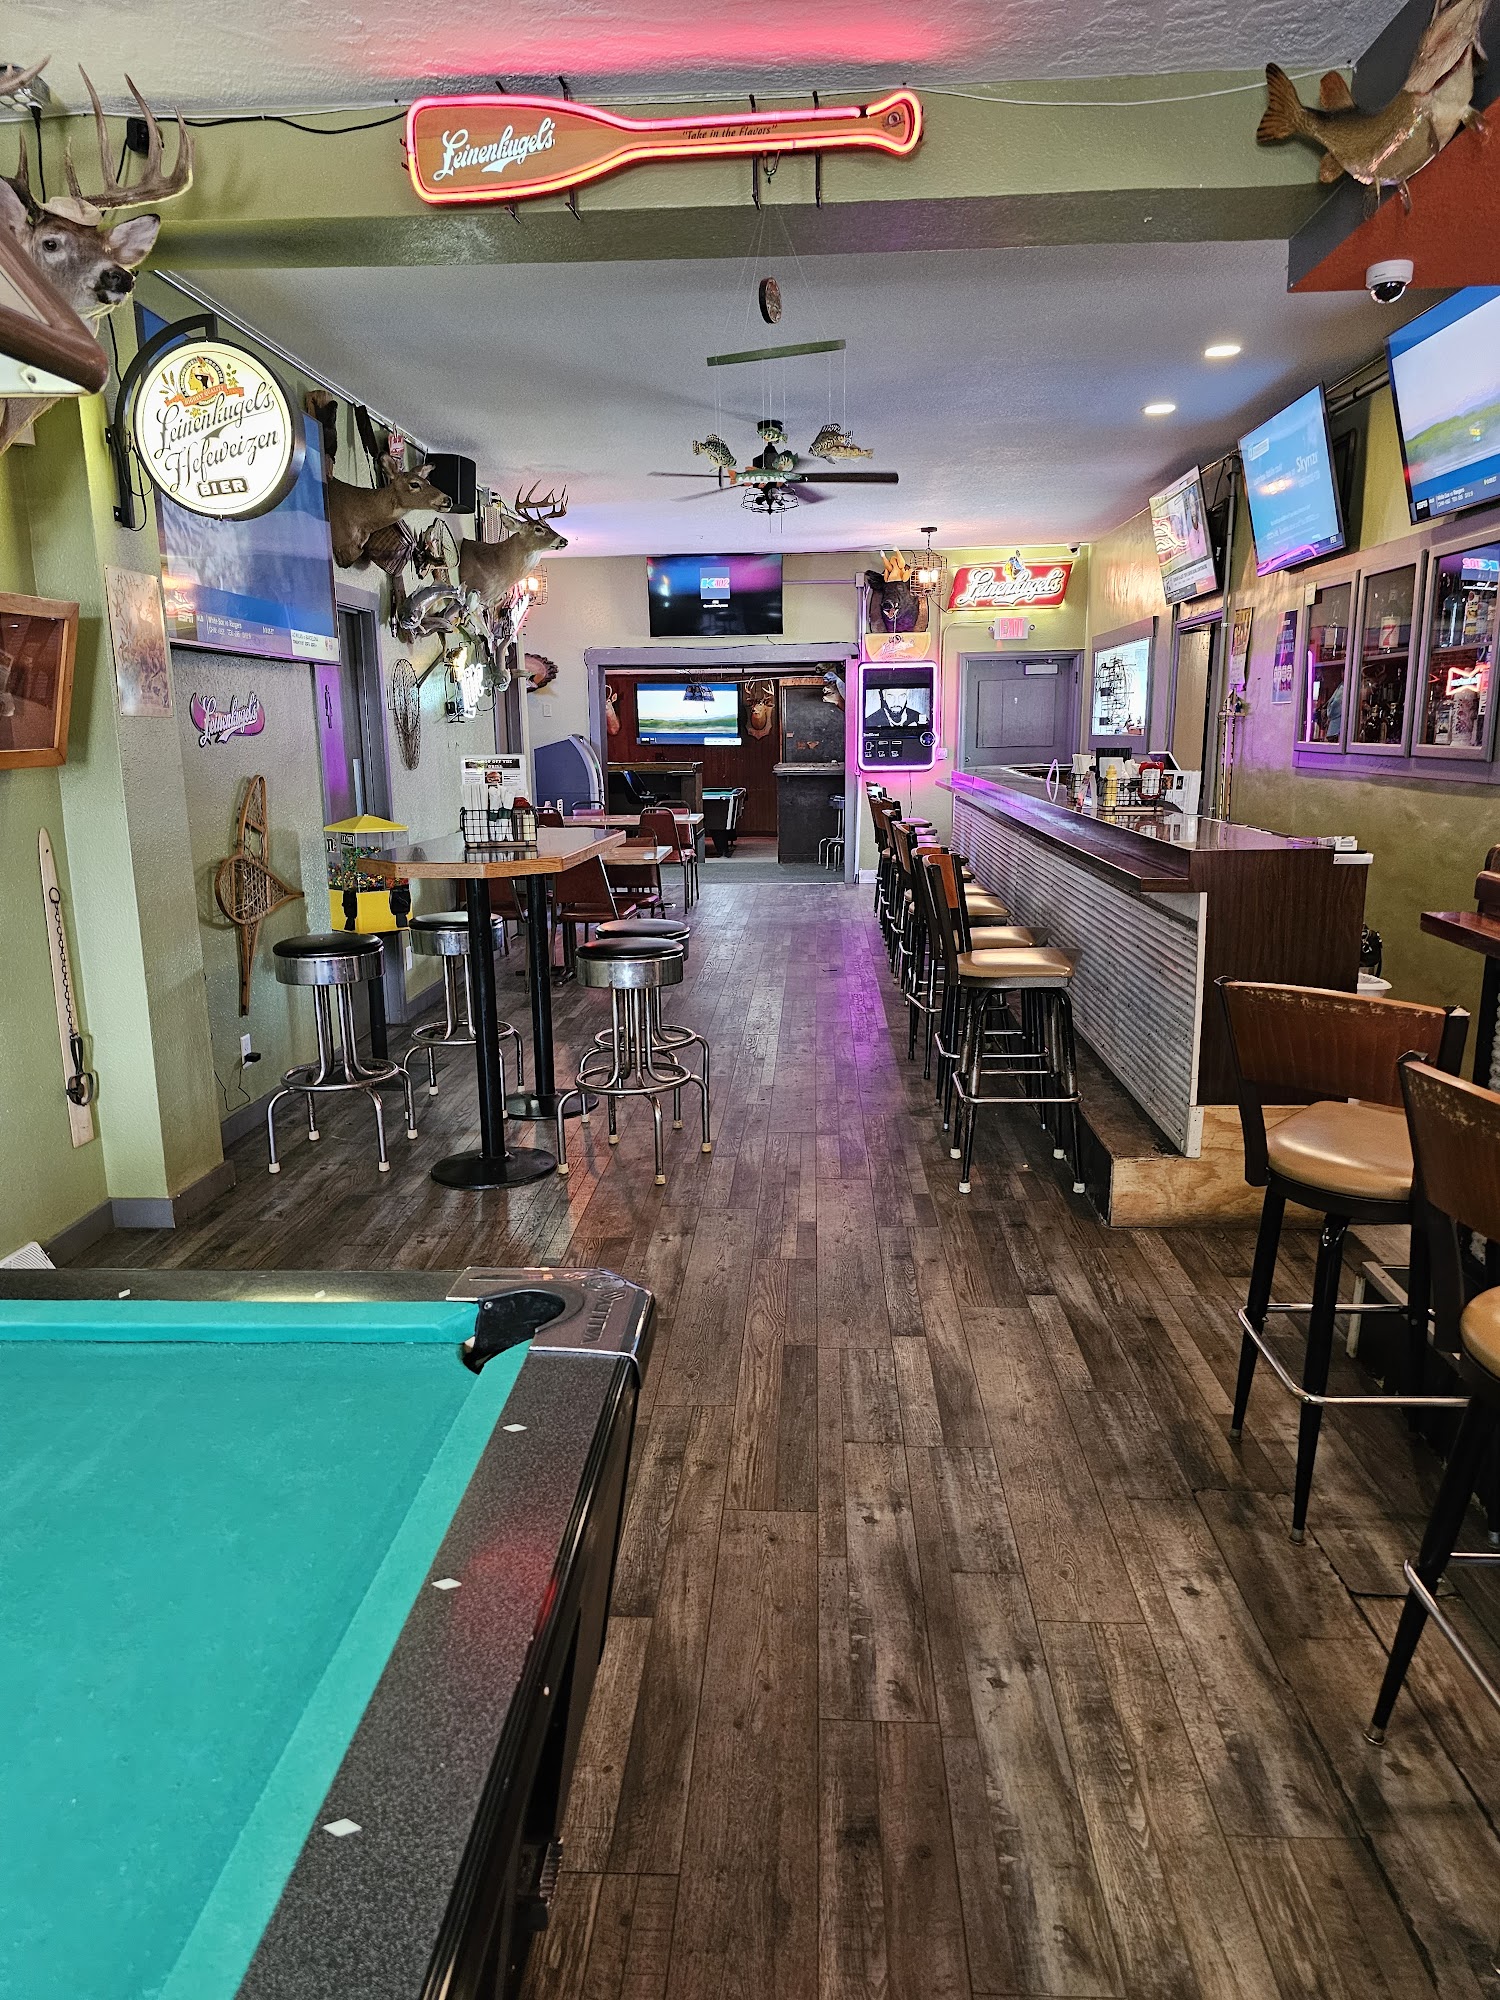 SKOL Bar & Grill is now the Friendly Tavern